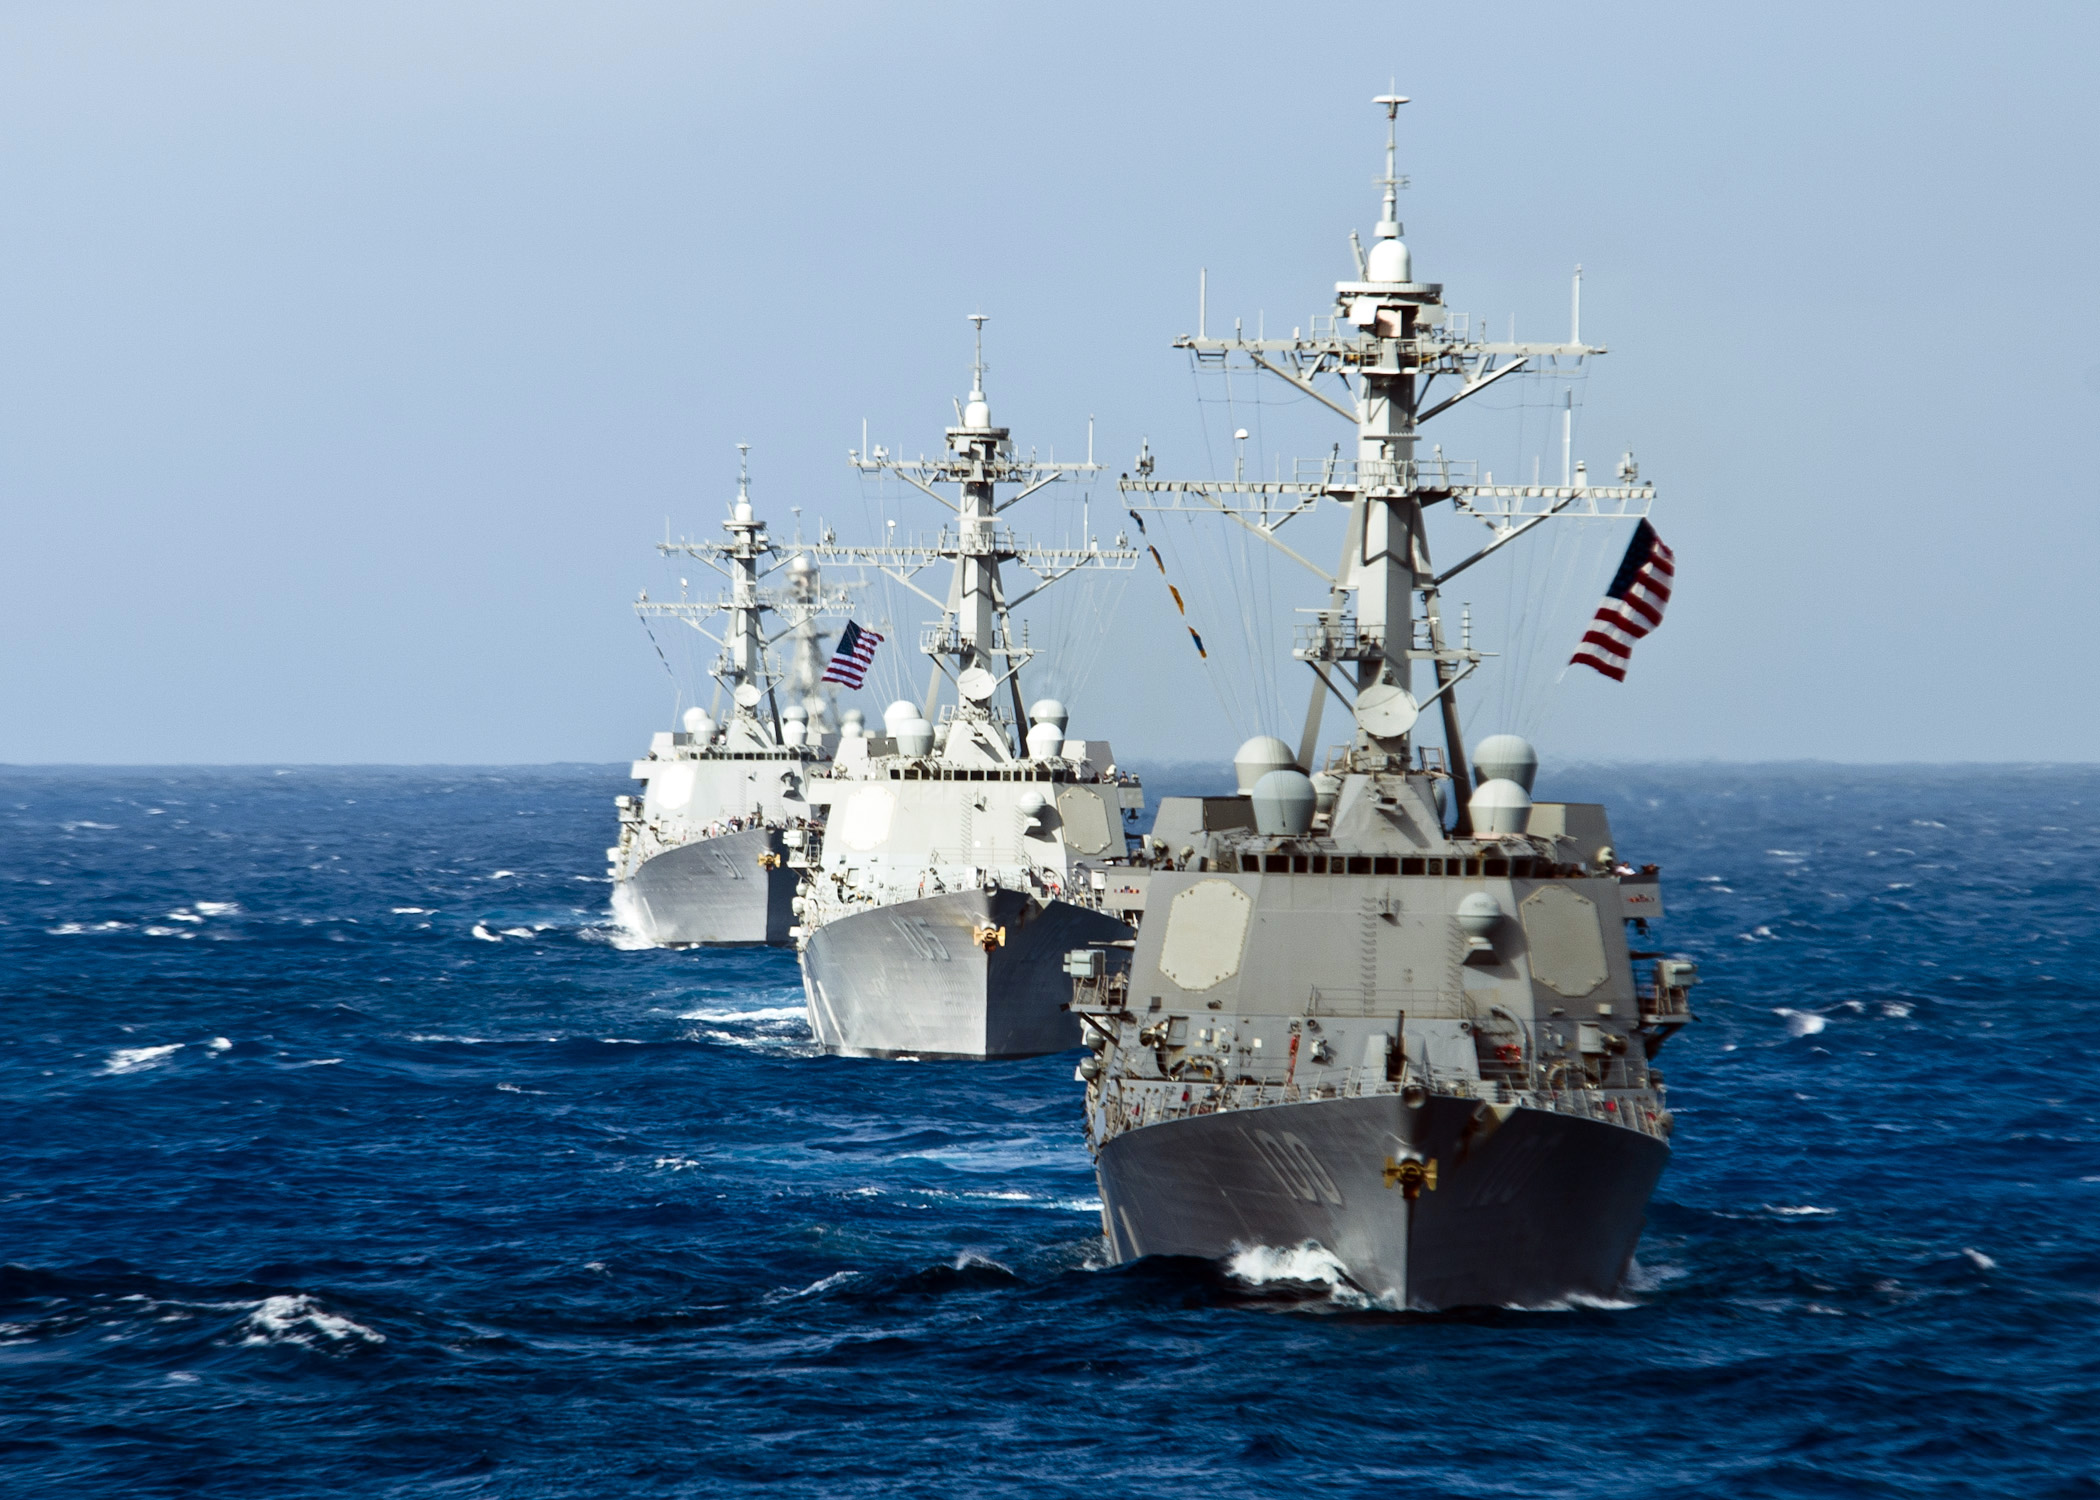 Photo courtesy of US Navy: https://www.flickr.com/photos/usnavy/6926524917/